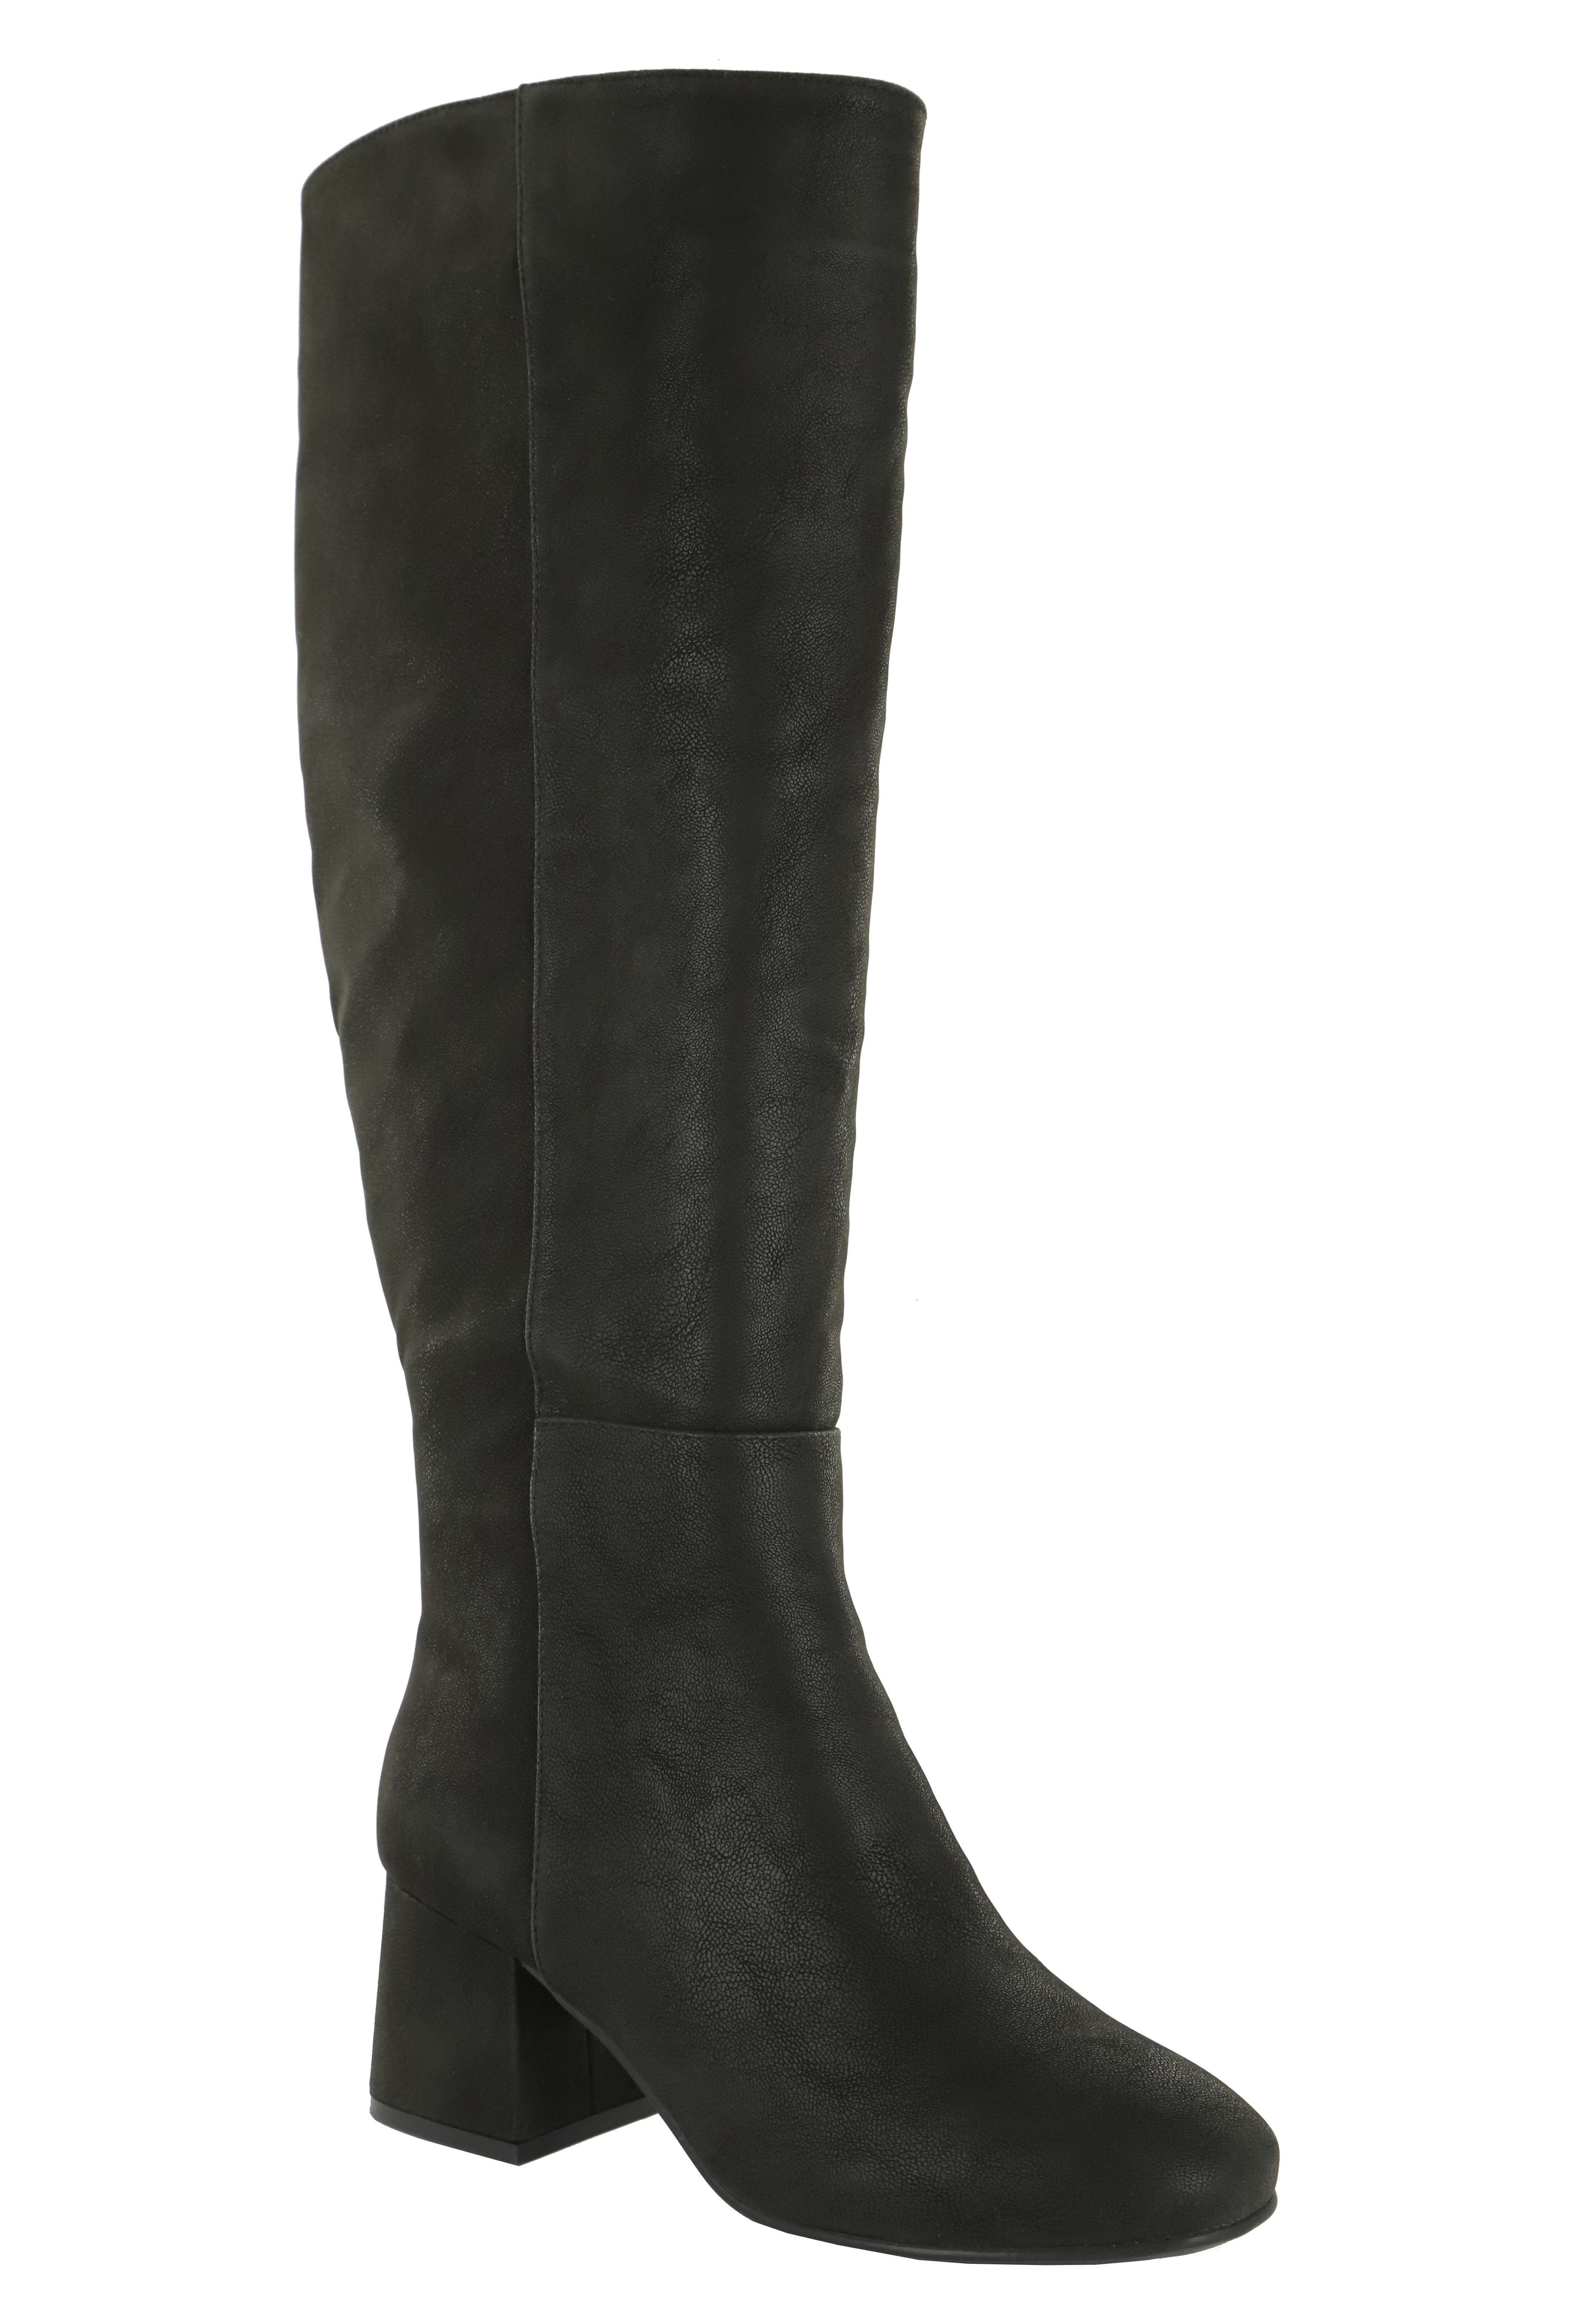 Eloquii Elements Women's Wide Calf Block Heel Dress Boots - Walmart.com